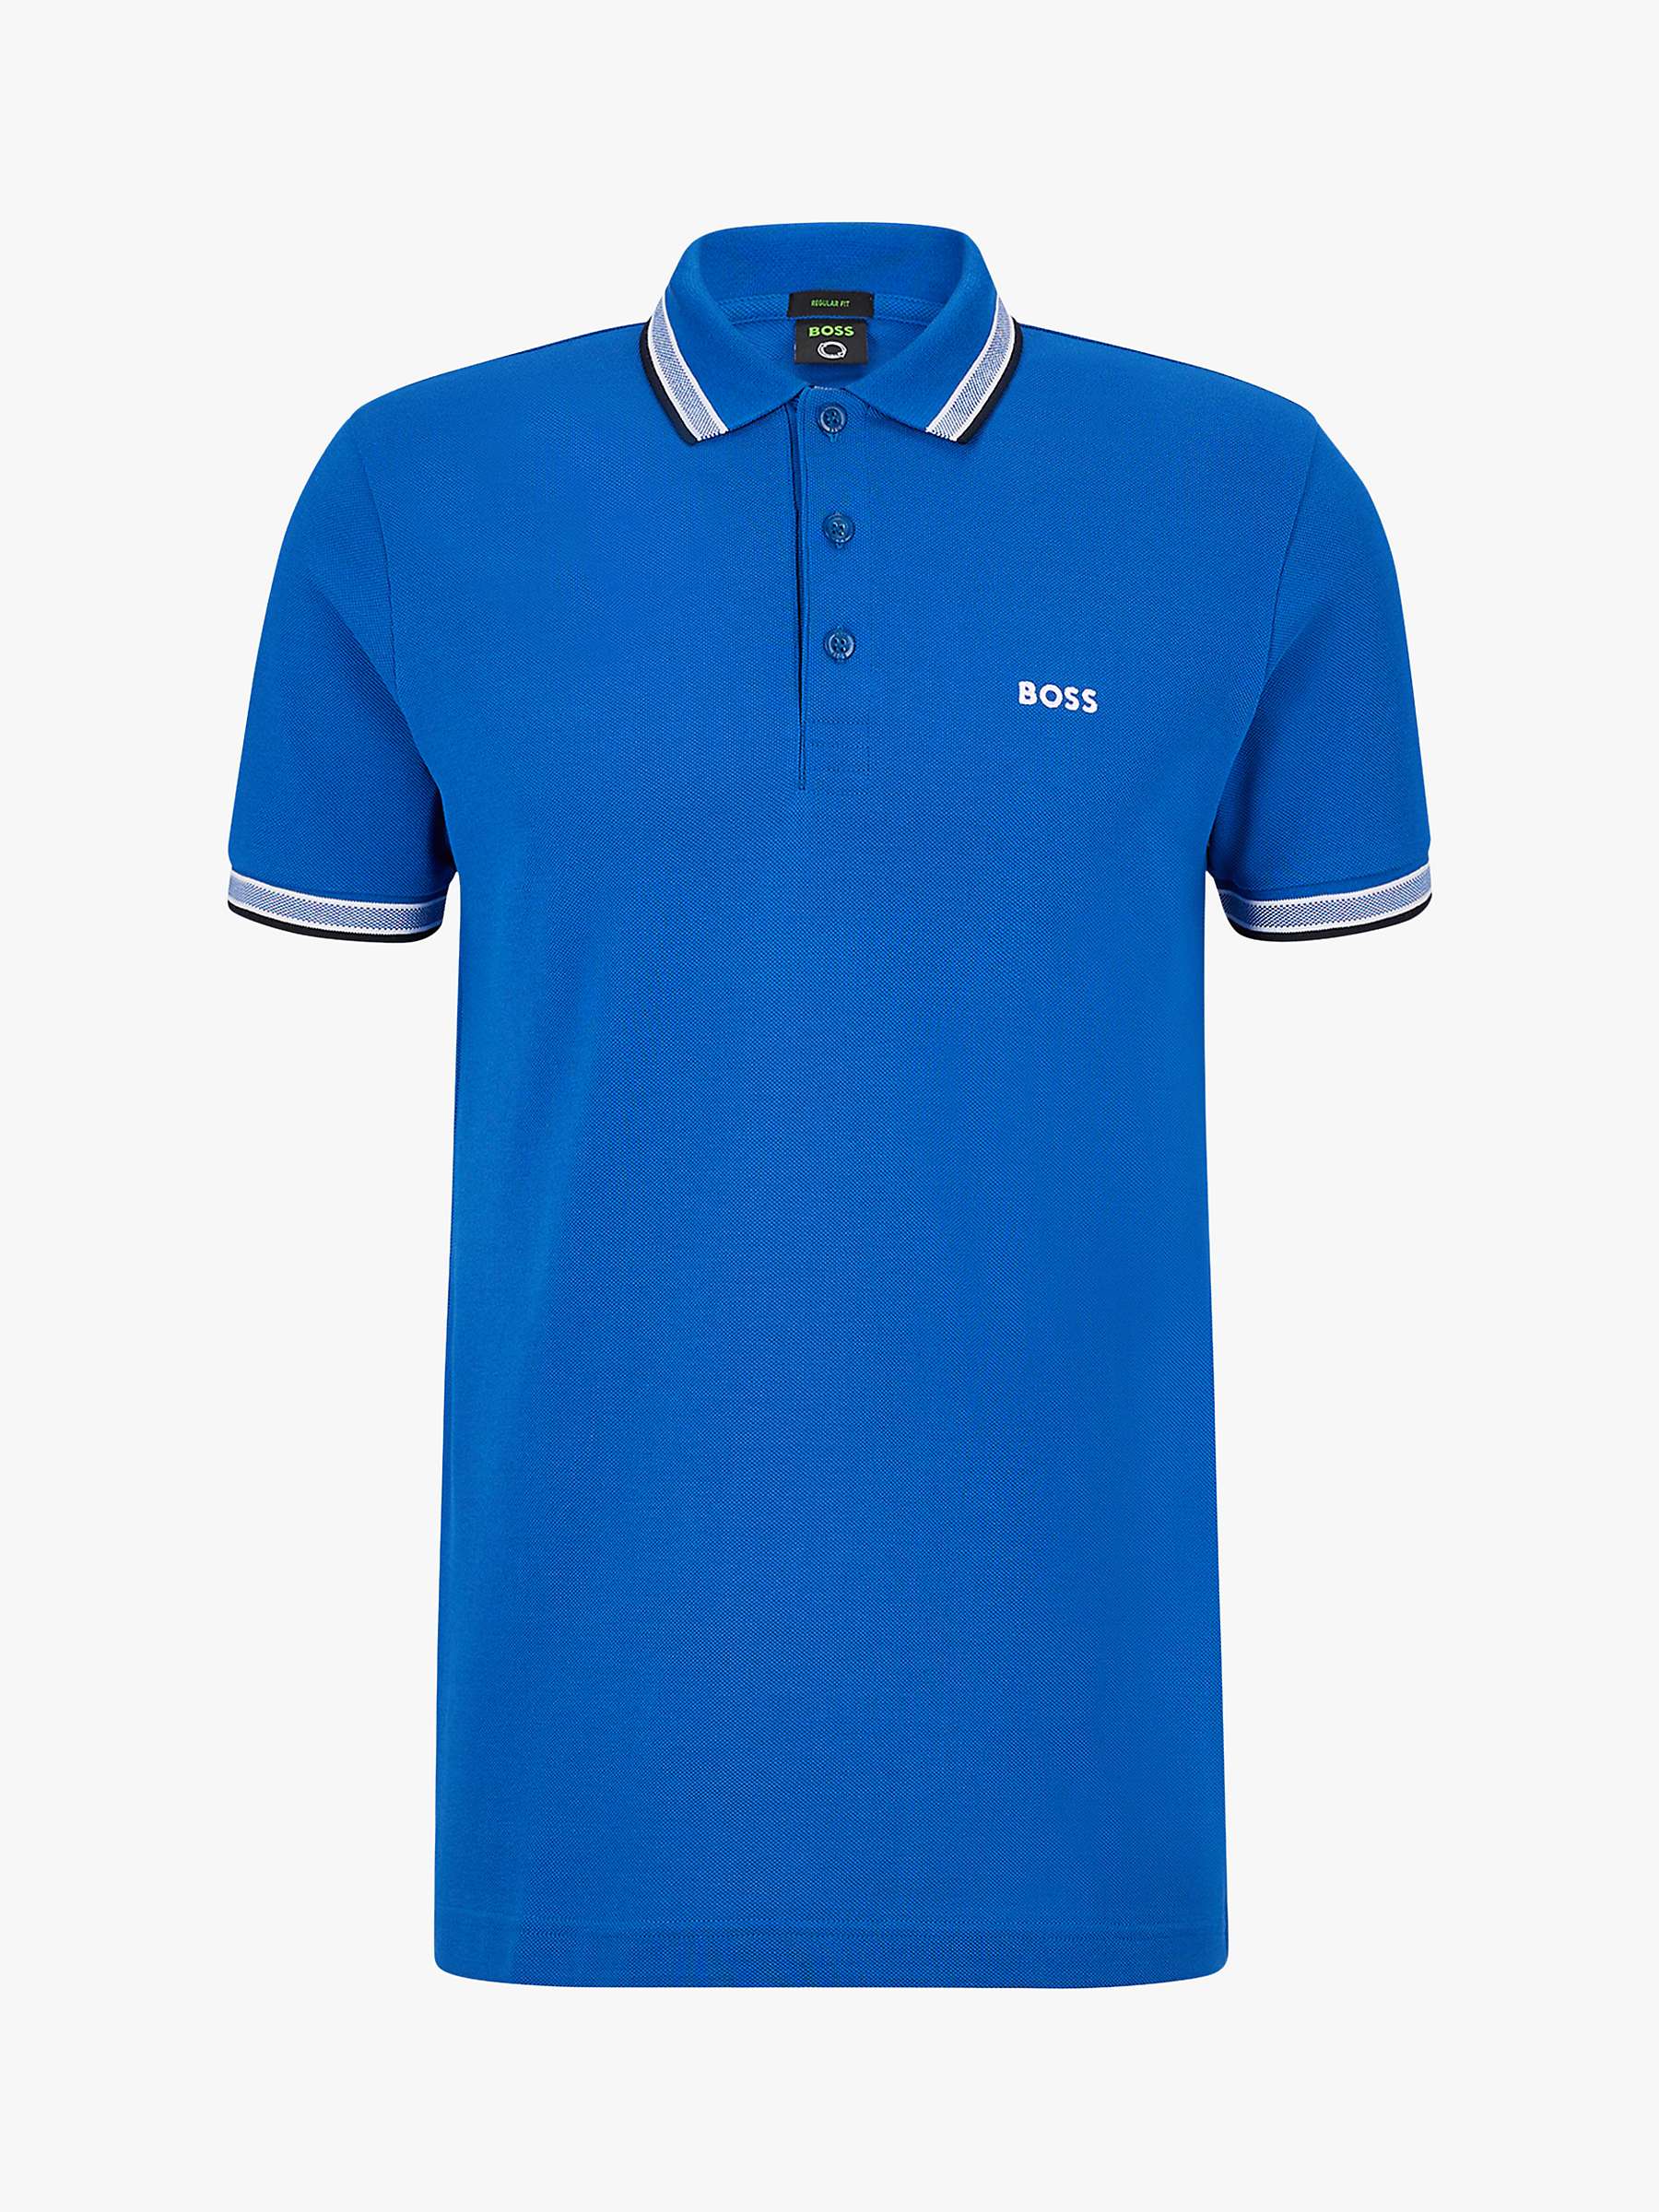 BOSS Paddy Short Sleeve Polo Shirt, Medium Blue at John Lewis & Partners